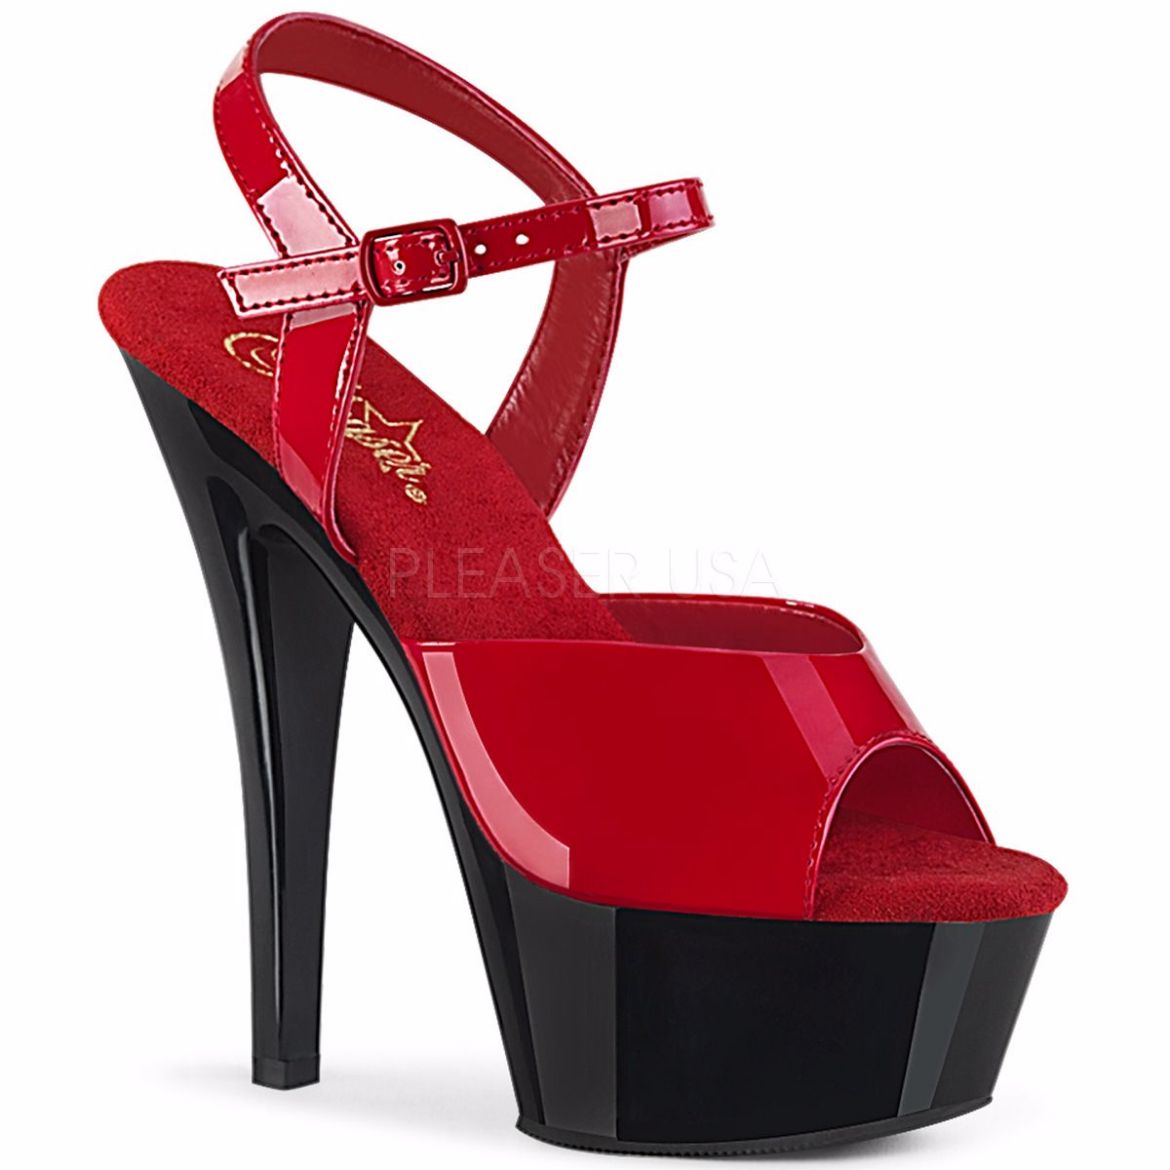 Product image of Pleaser KISS-209 Red Patent/Black 6 inch (15.2 cm) Heel 1 3/4 inch (4.5 cm) Platform Ankle Strap Sandal Shoes